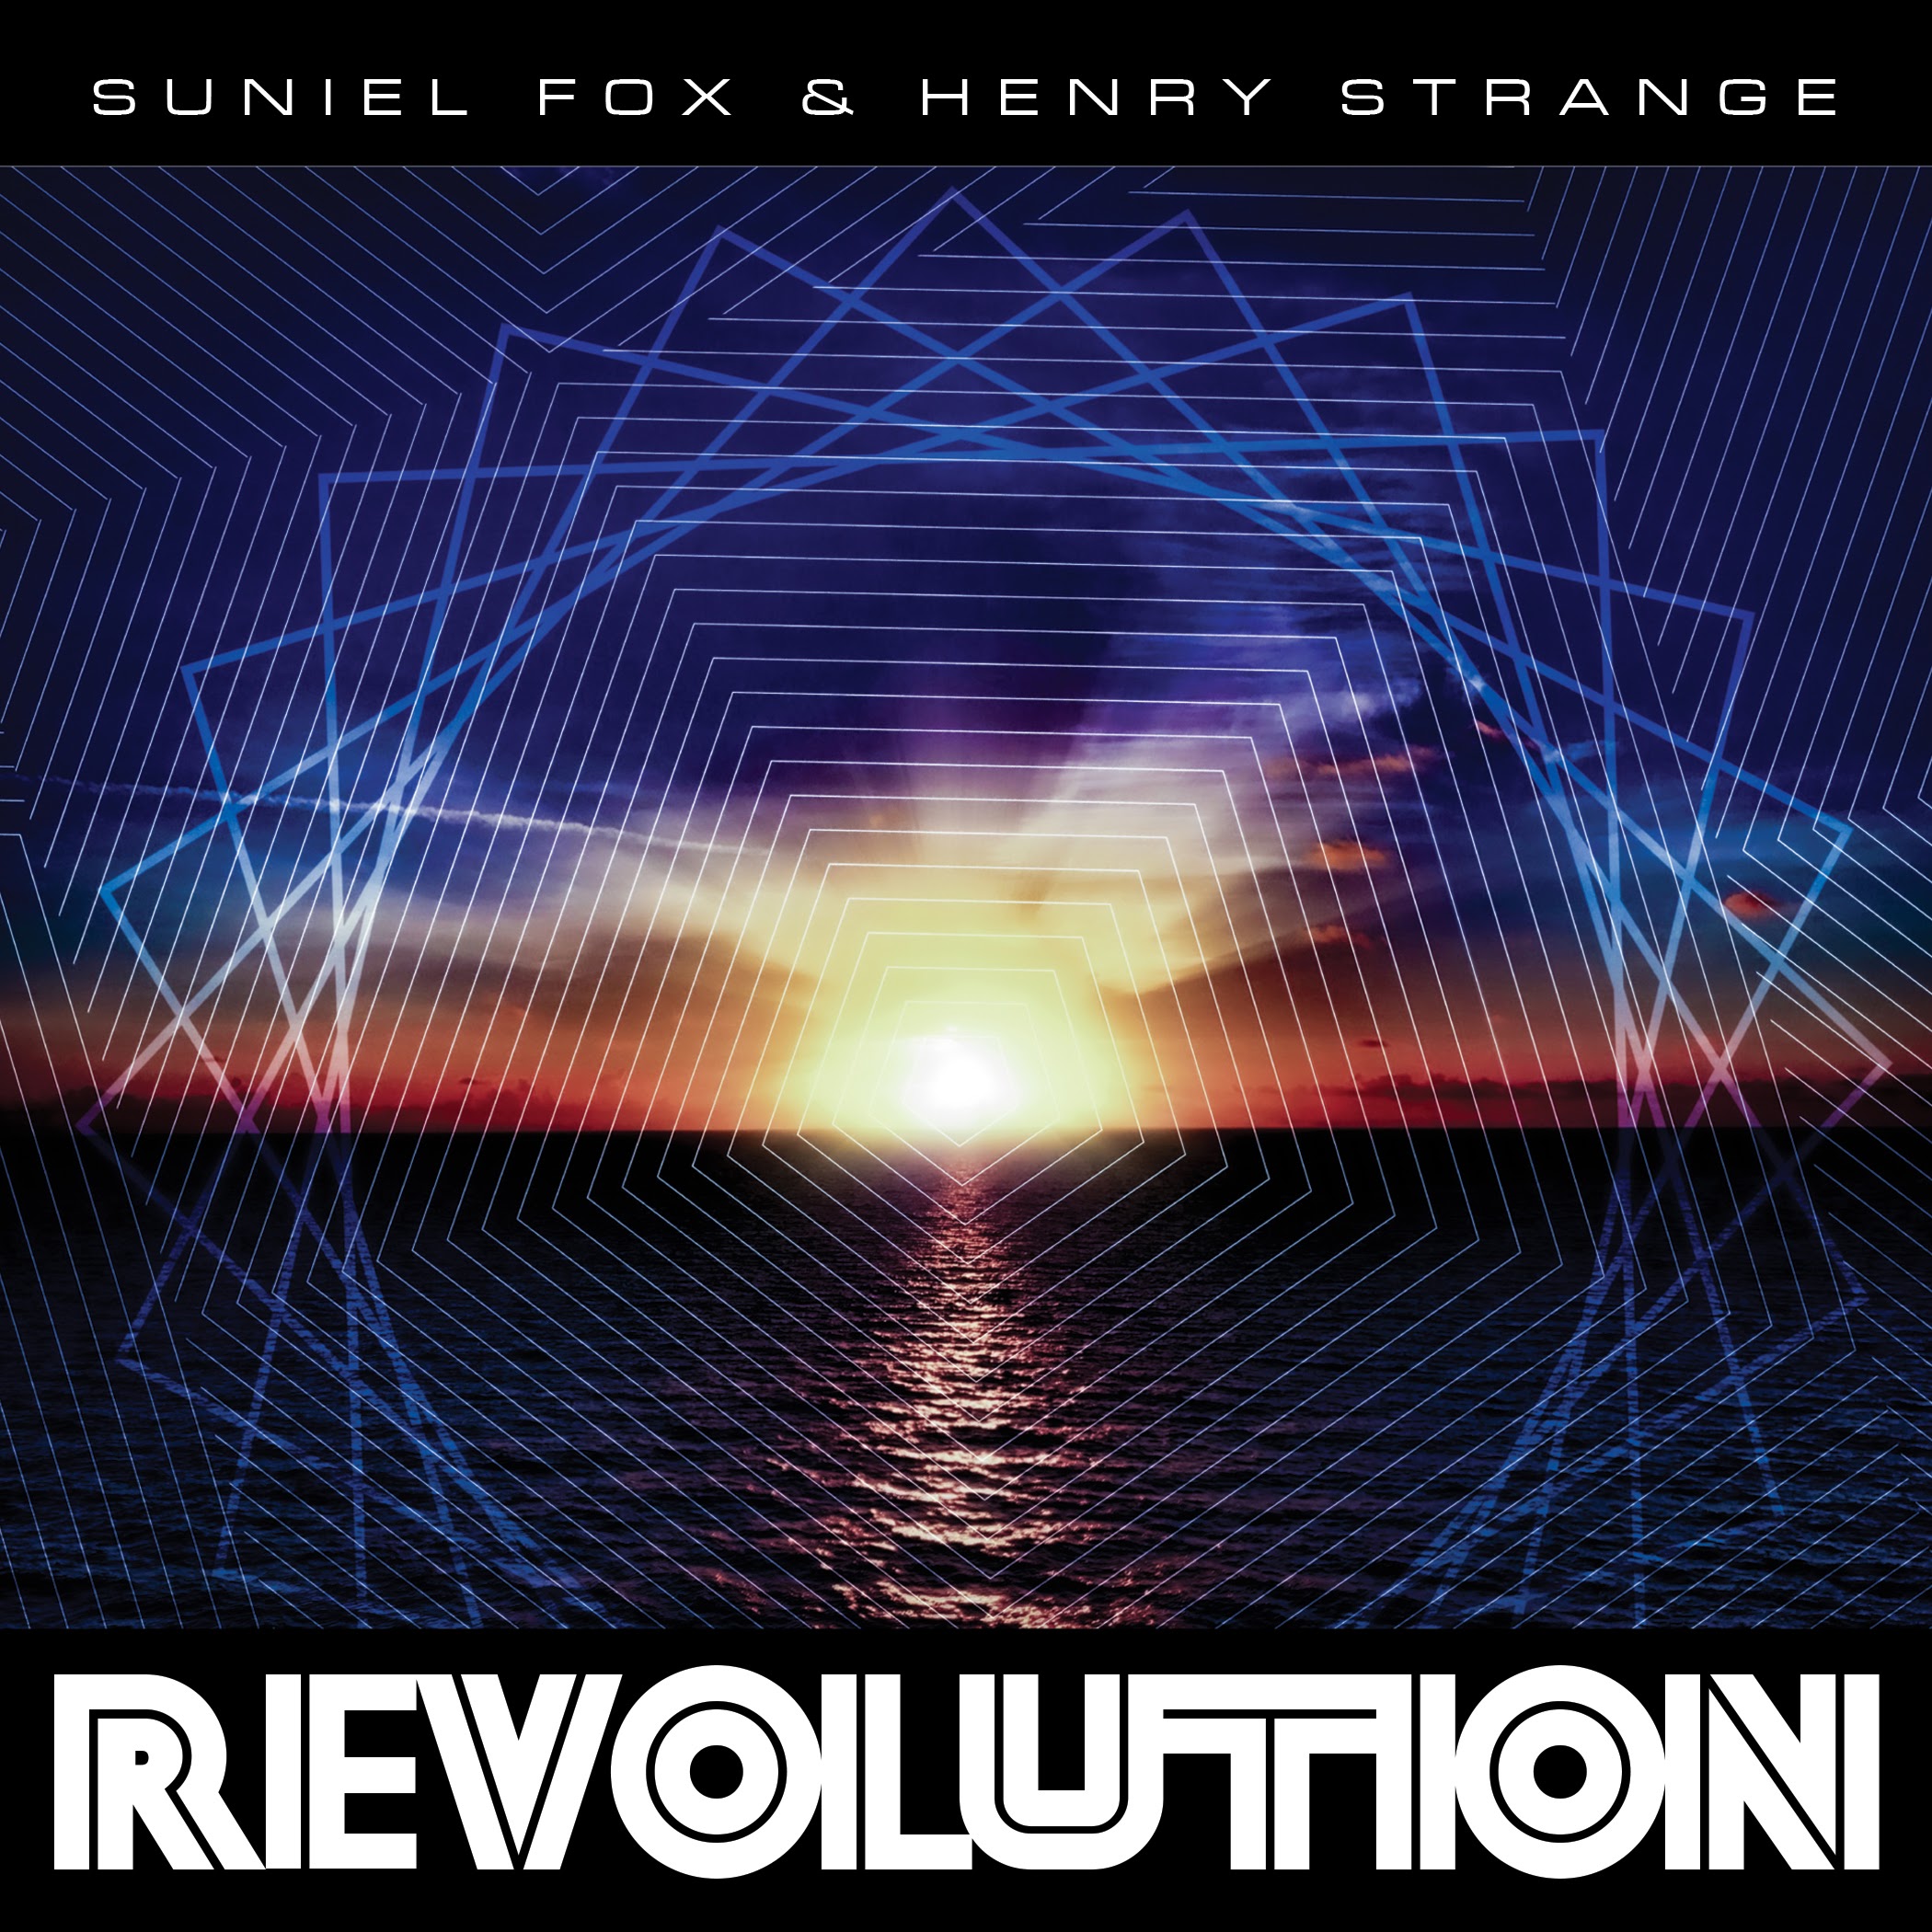 Suniel Fox And Henry Strange Create Inventive Uplifting Single In “Revolution”